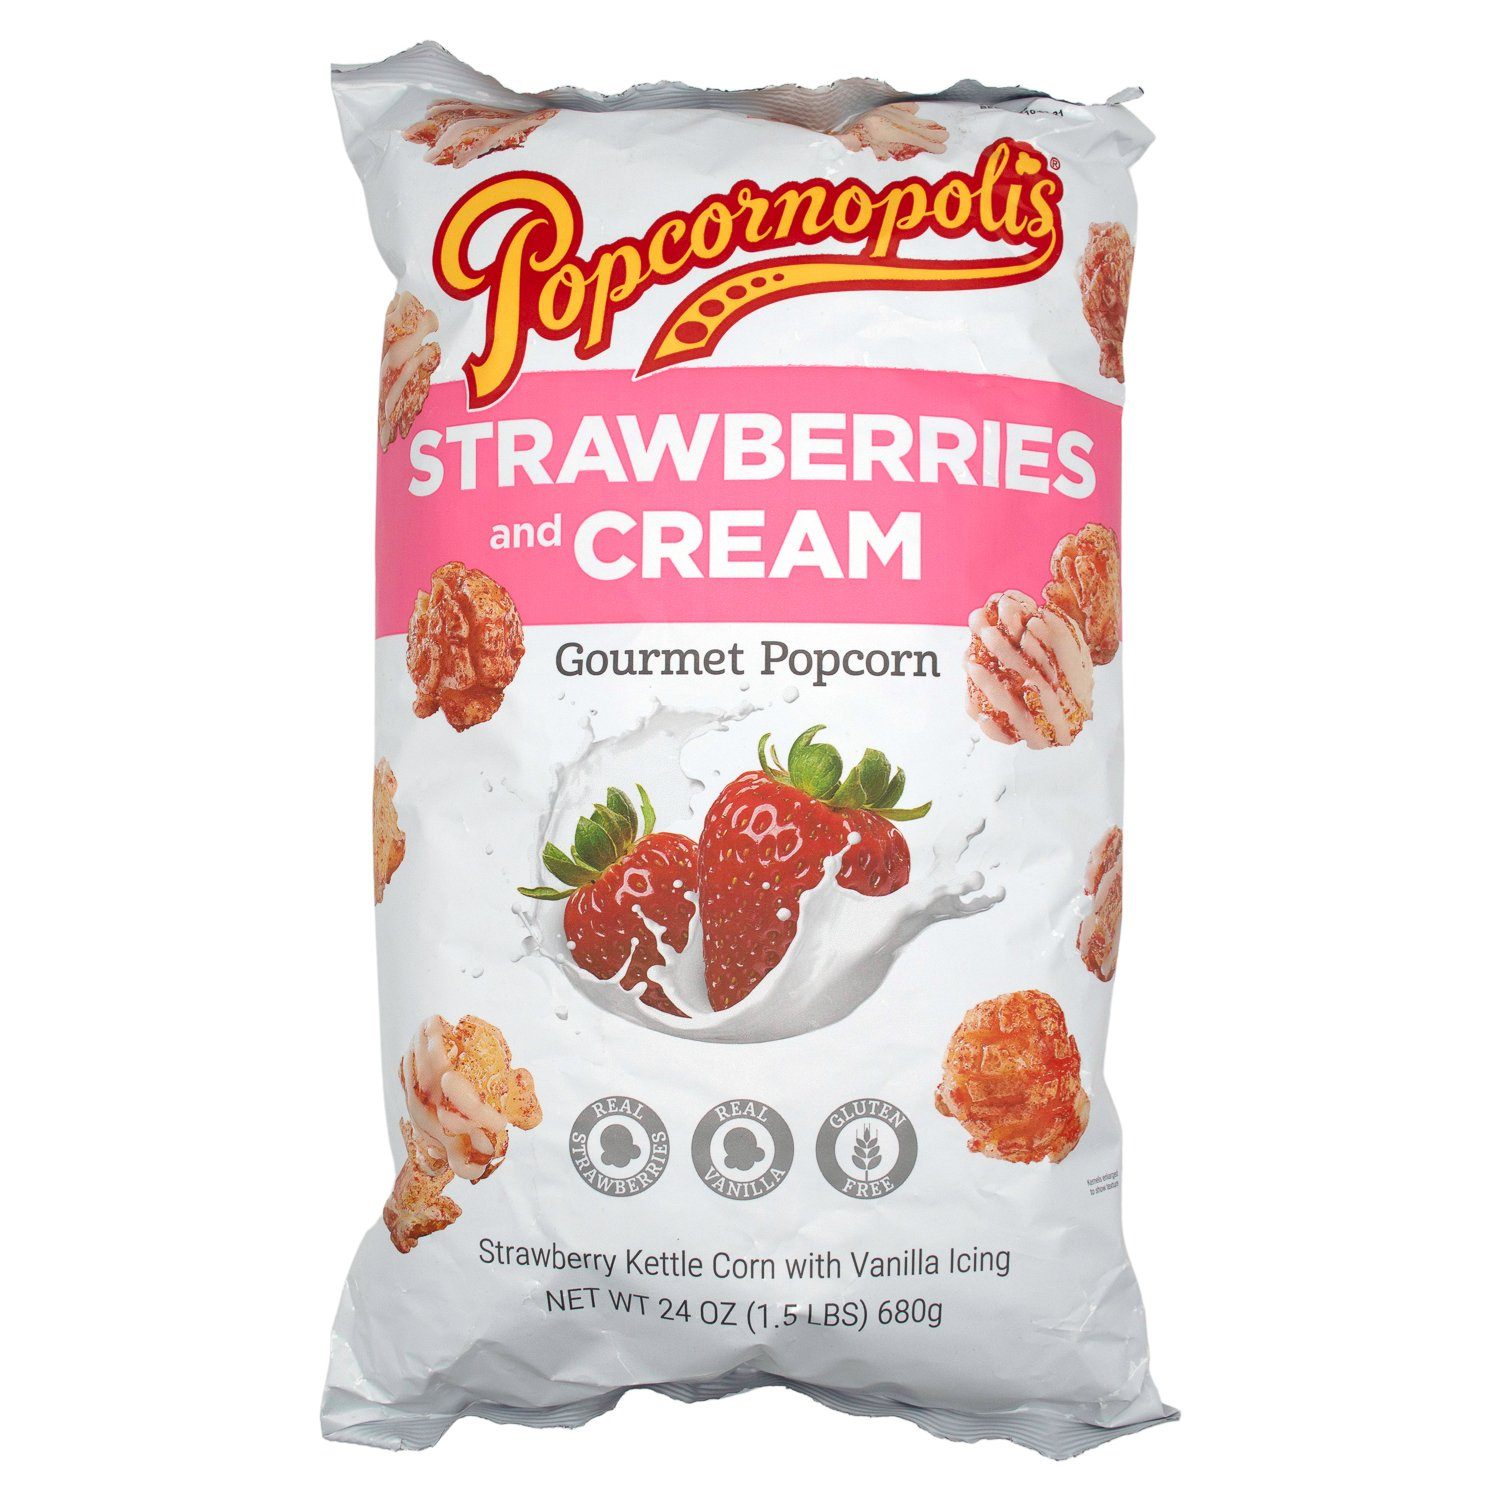 Popcornopolis Gourmet Popcorn Popcornopolis Strawberries and Cream 24 Ounce 